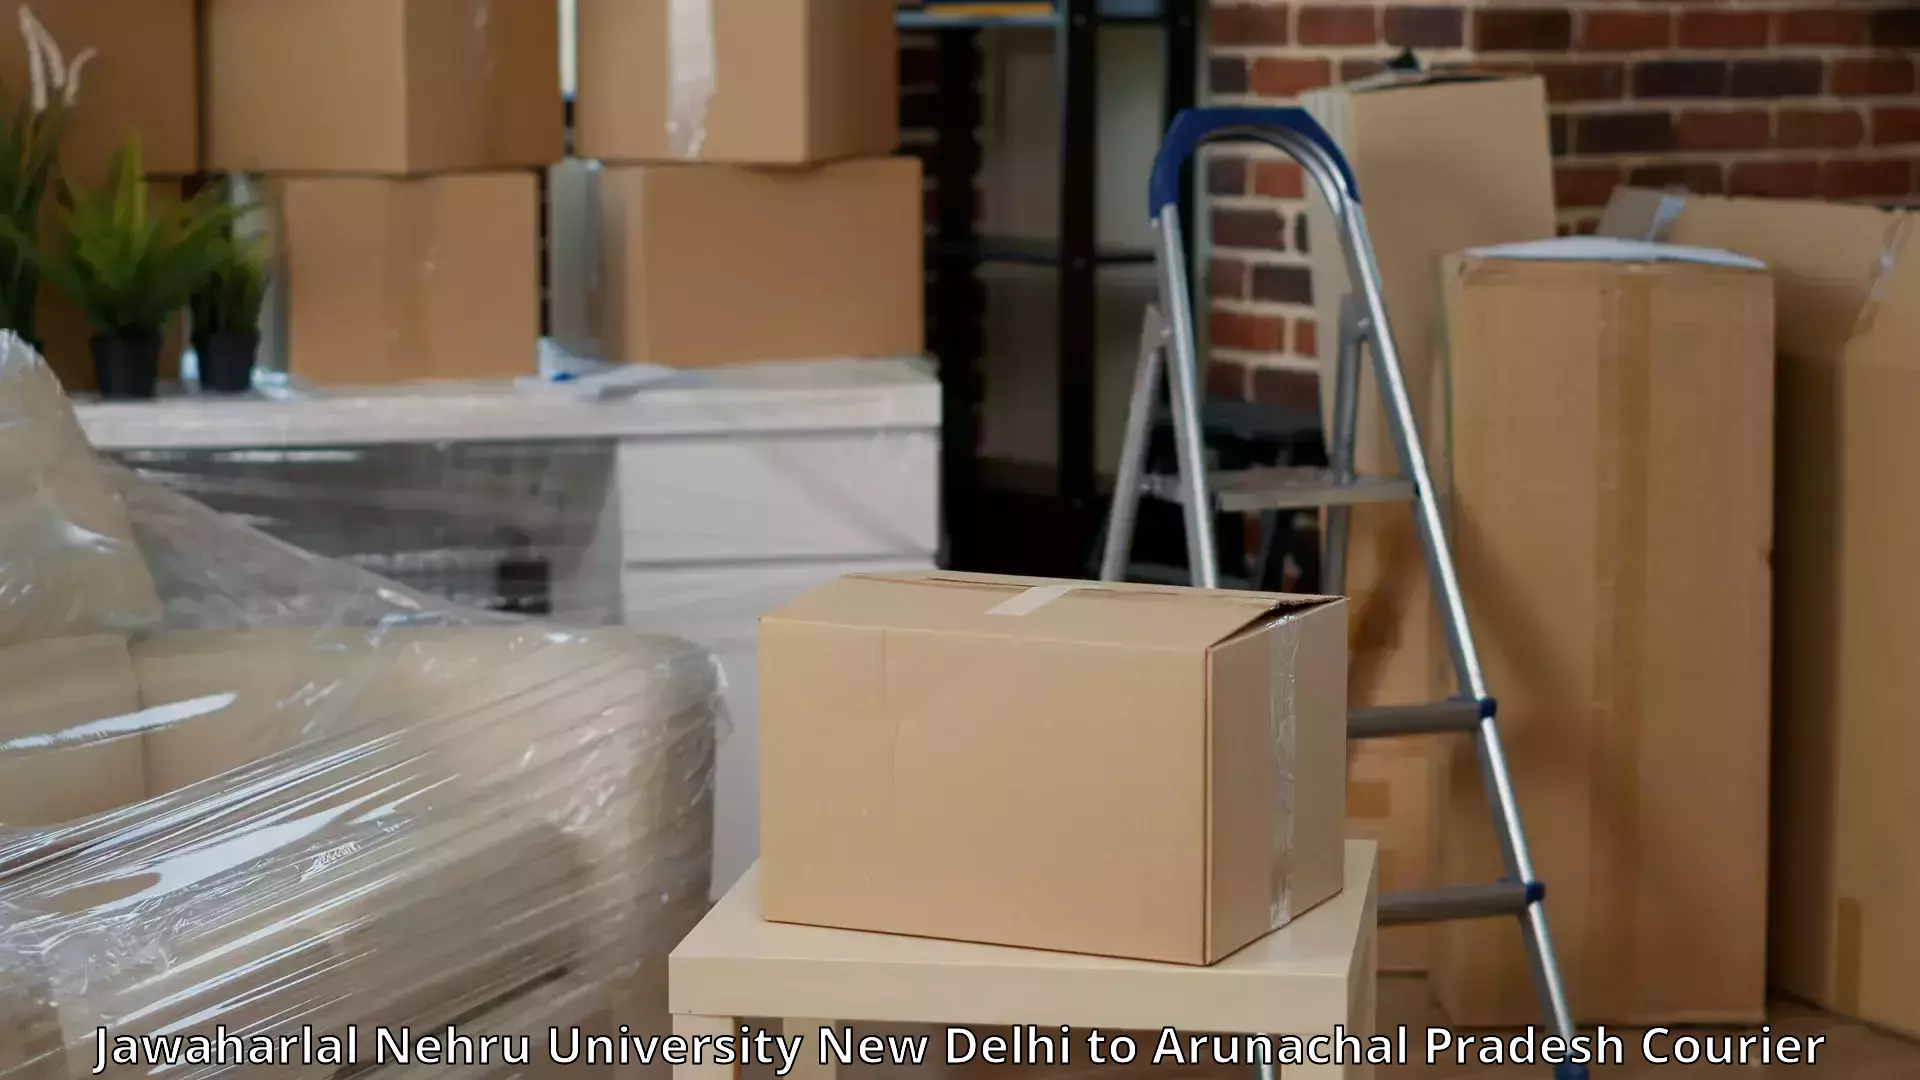 Professional moving company Jawaharlal Nehru University New Delhi to Lohit